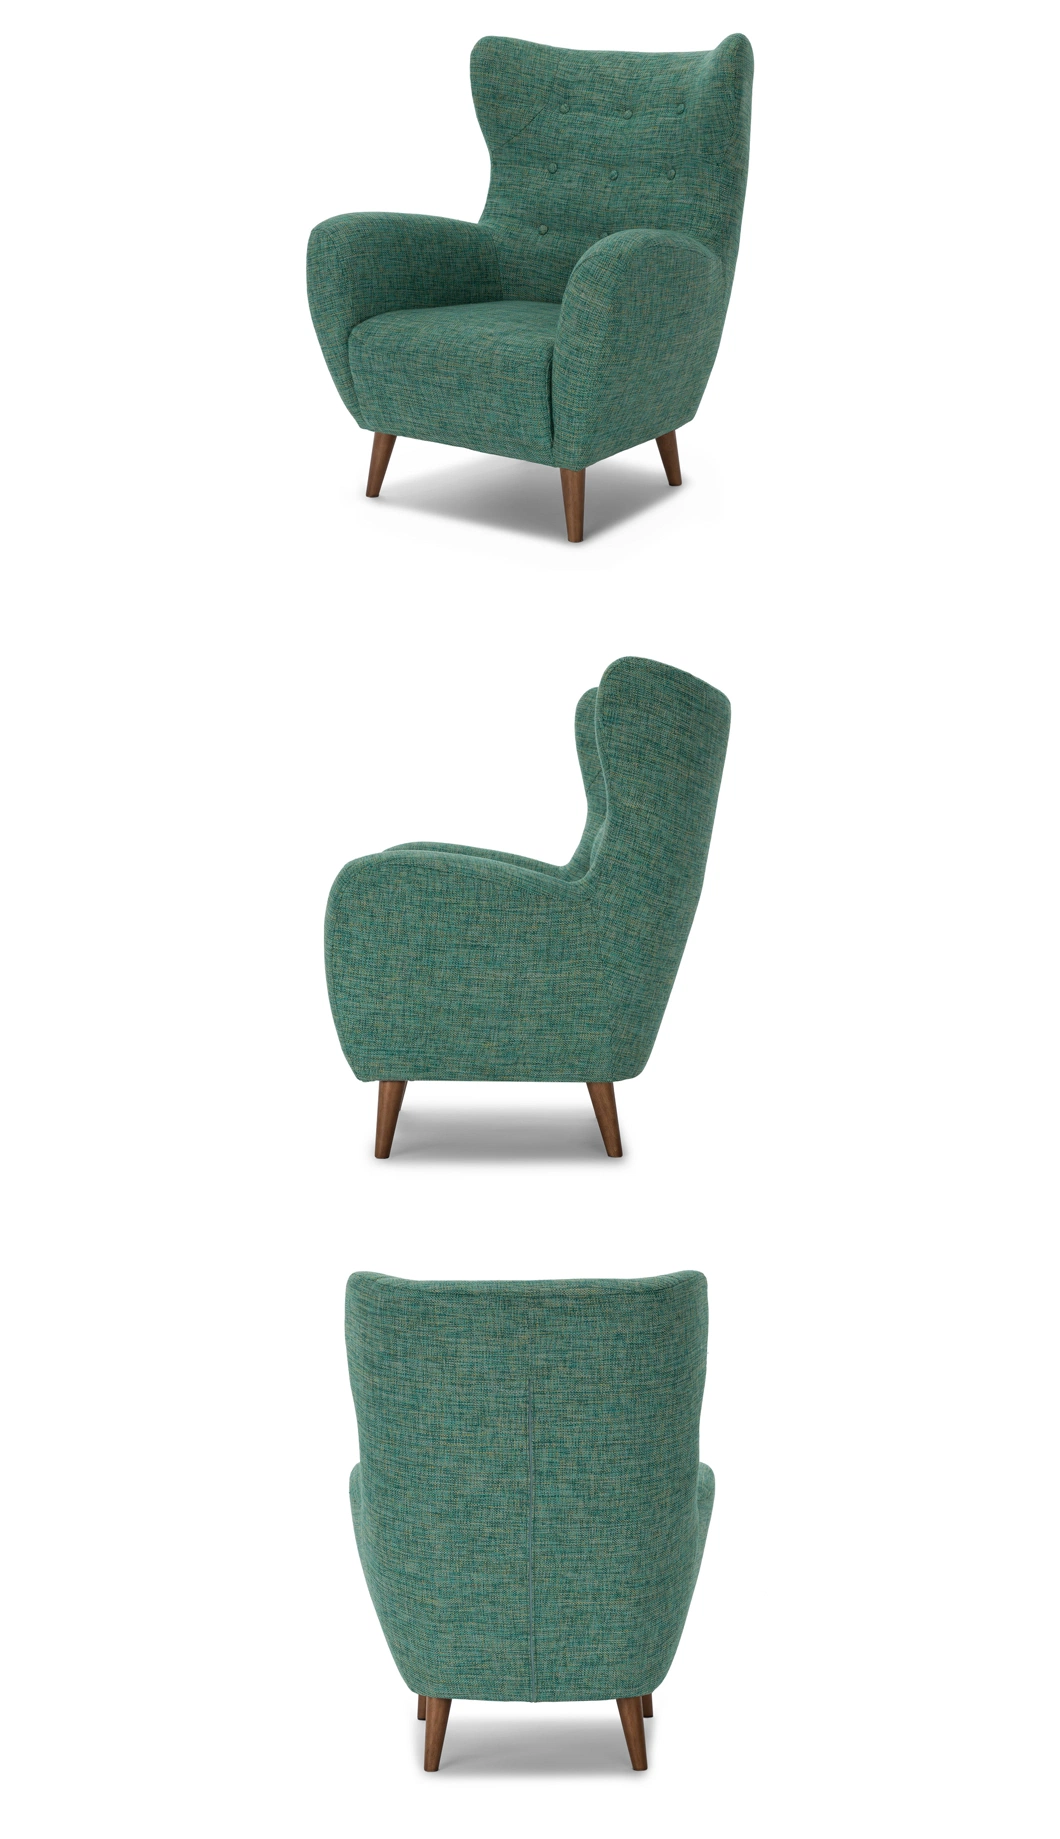 Modern Living Room Furniture Lounge Chair Fauteuil Design Minimalist Modern Armchair